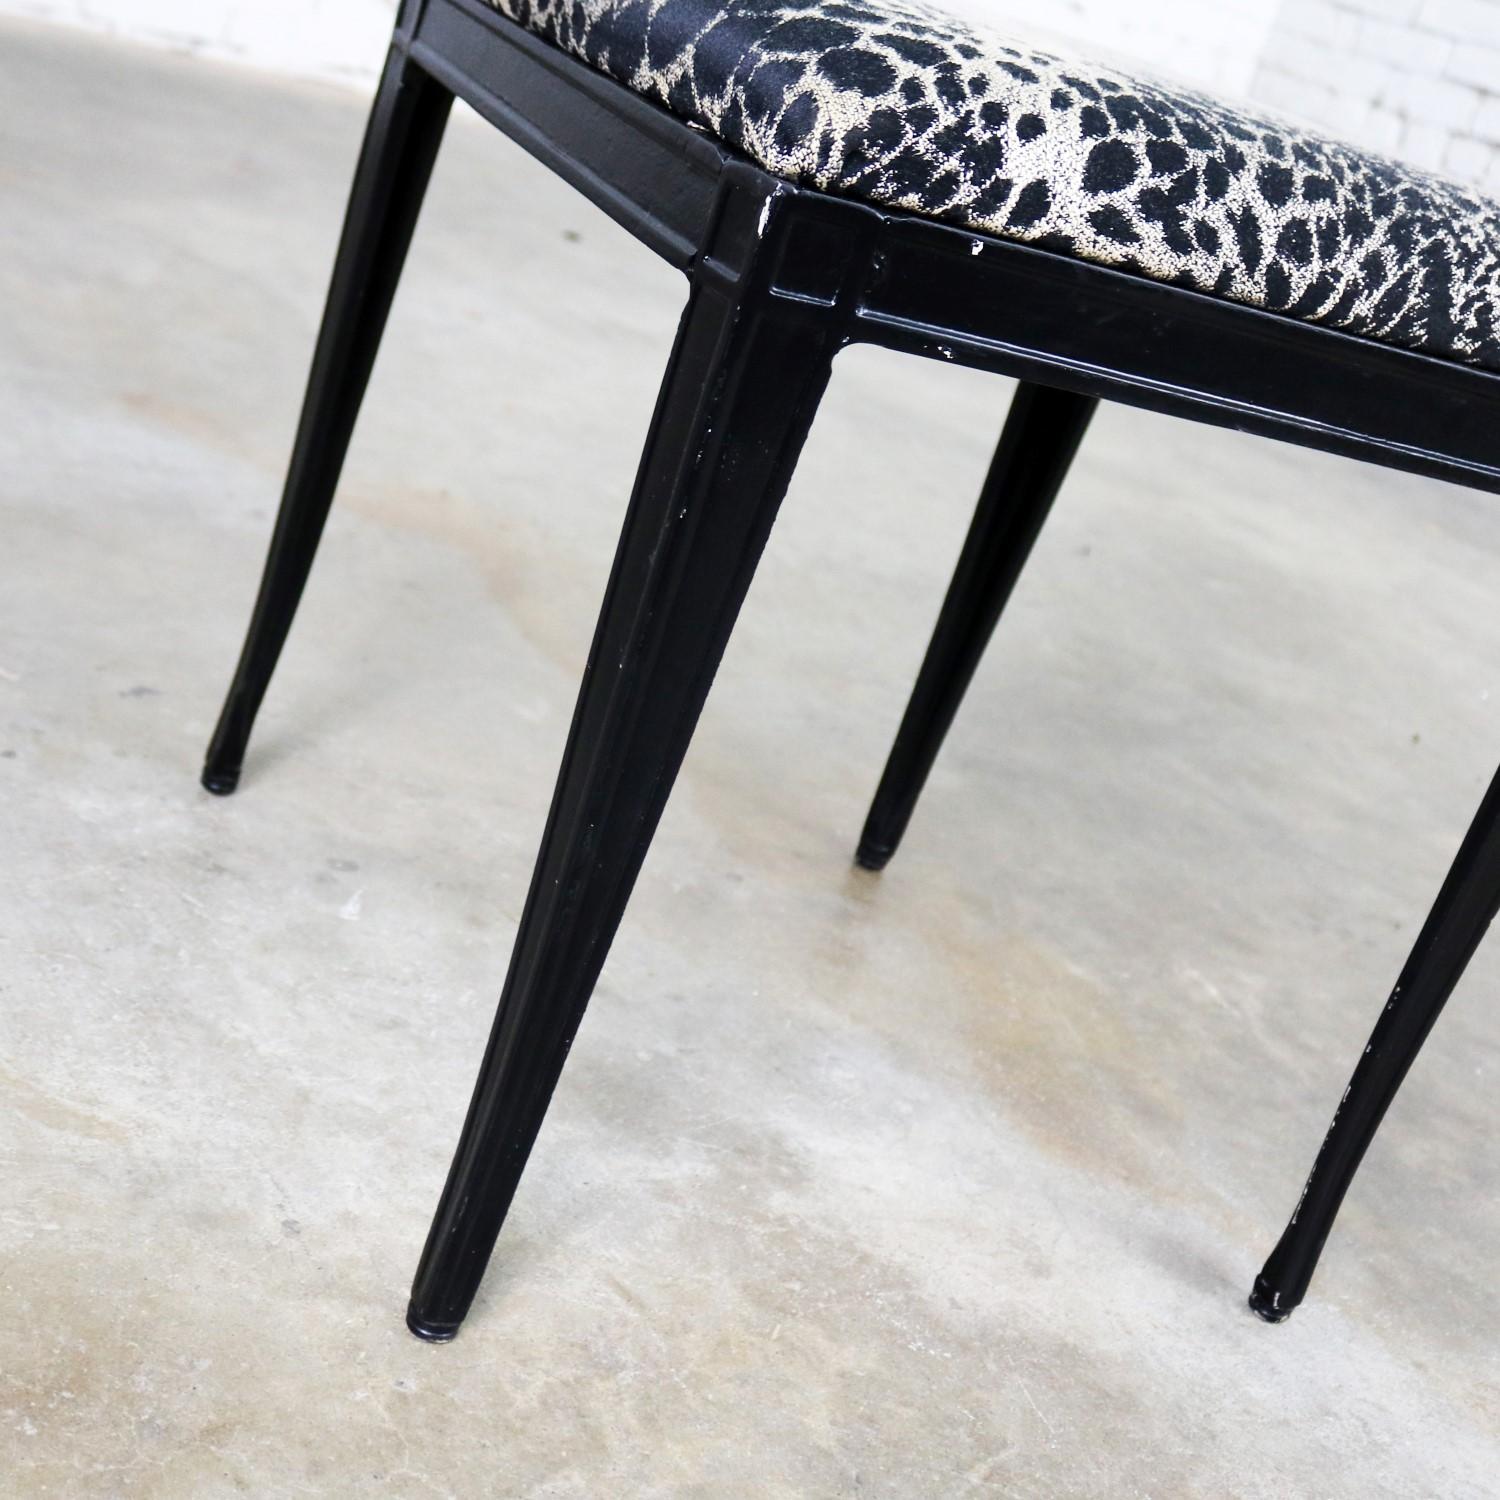 Black Art Deco and Animal Print Bench Ottoman Footstool Cast Aluminum by Crucibl 1